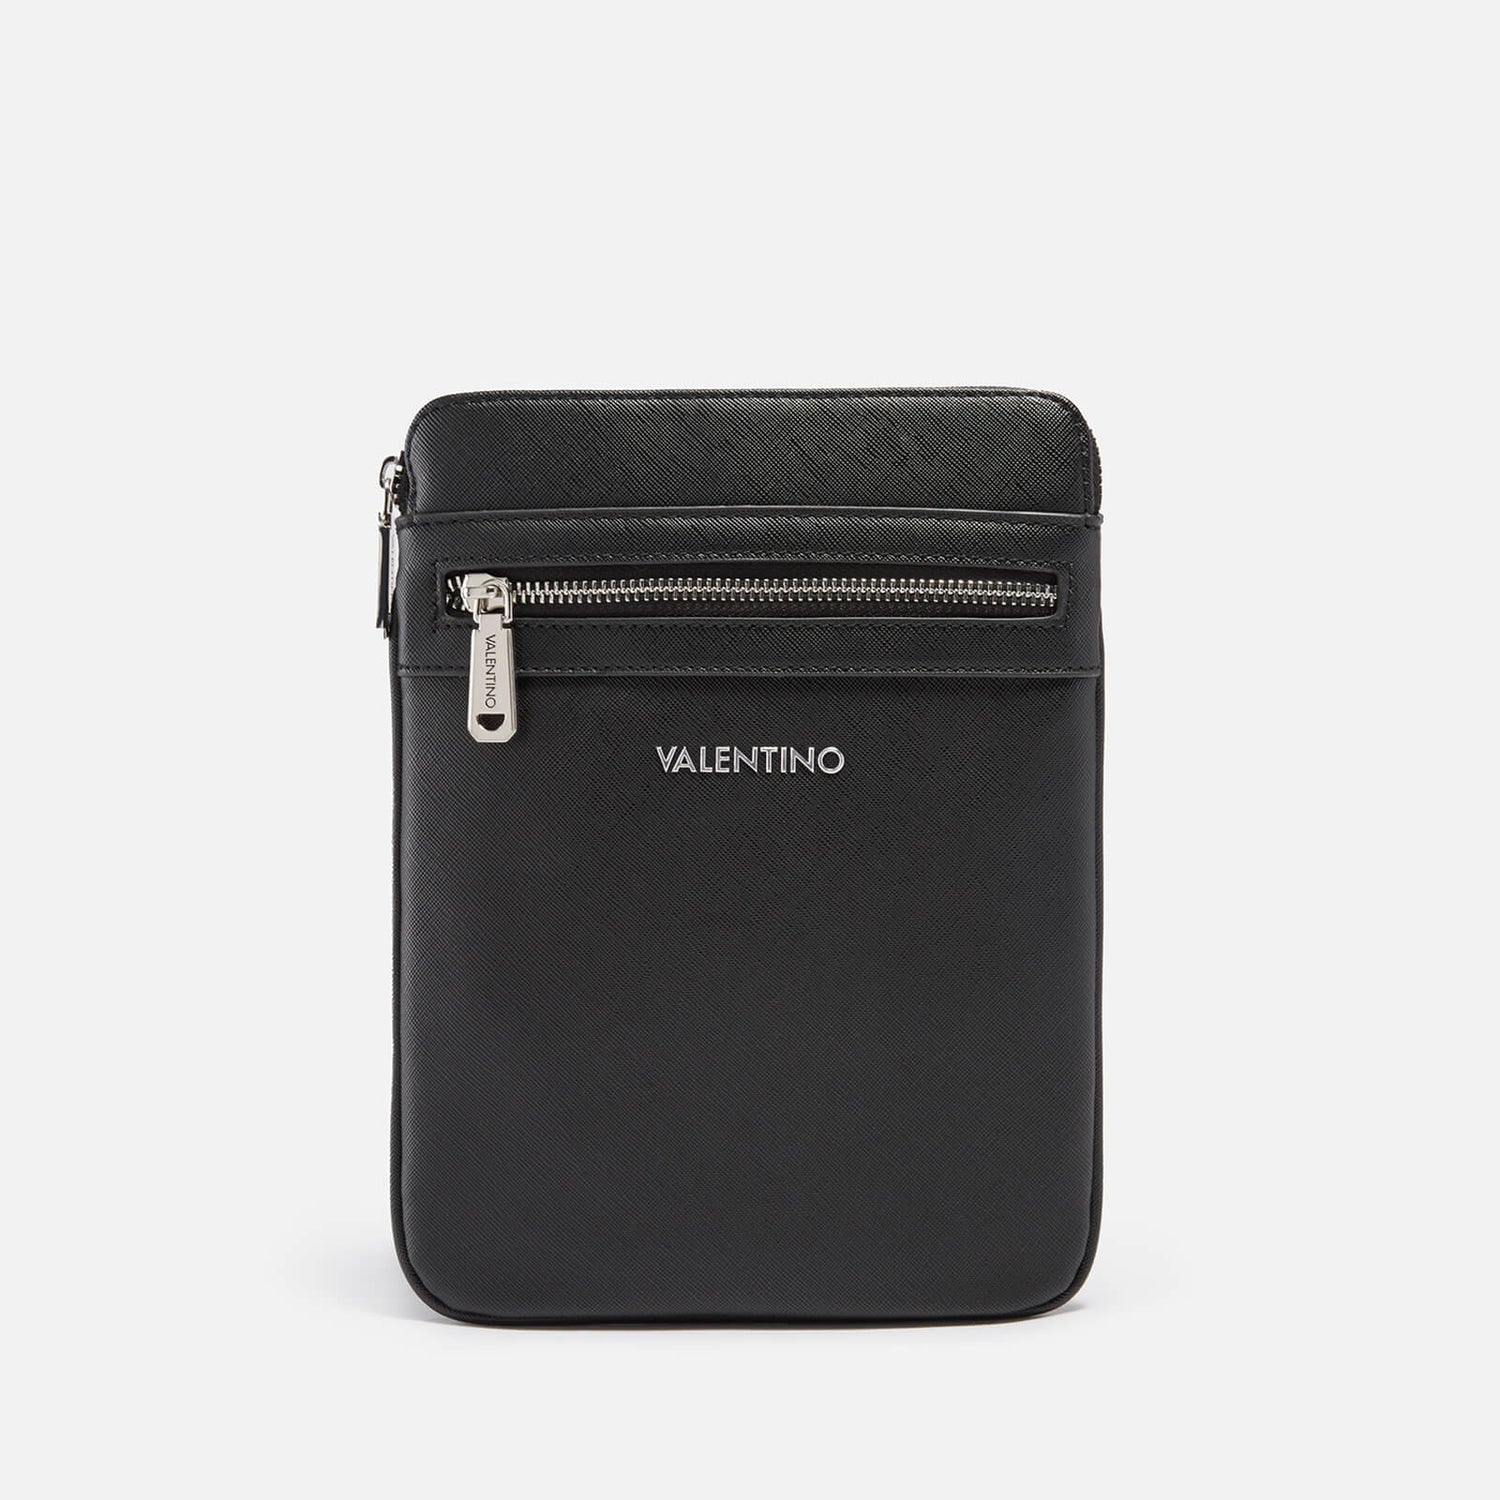 Valentino Men's Marnier Cross Body Bag - Black | TheHut.com